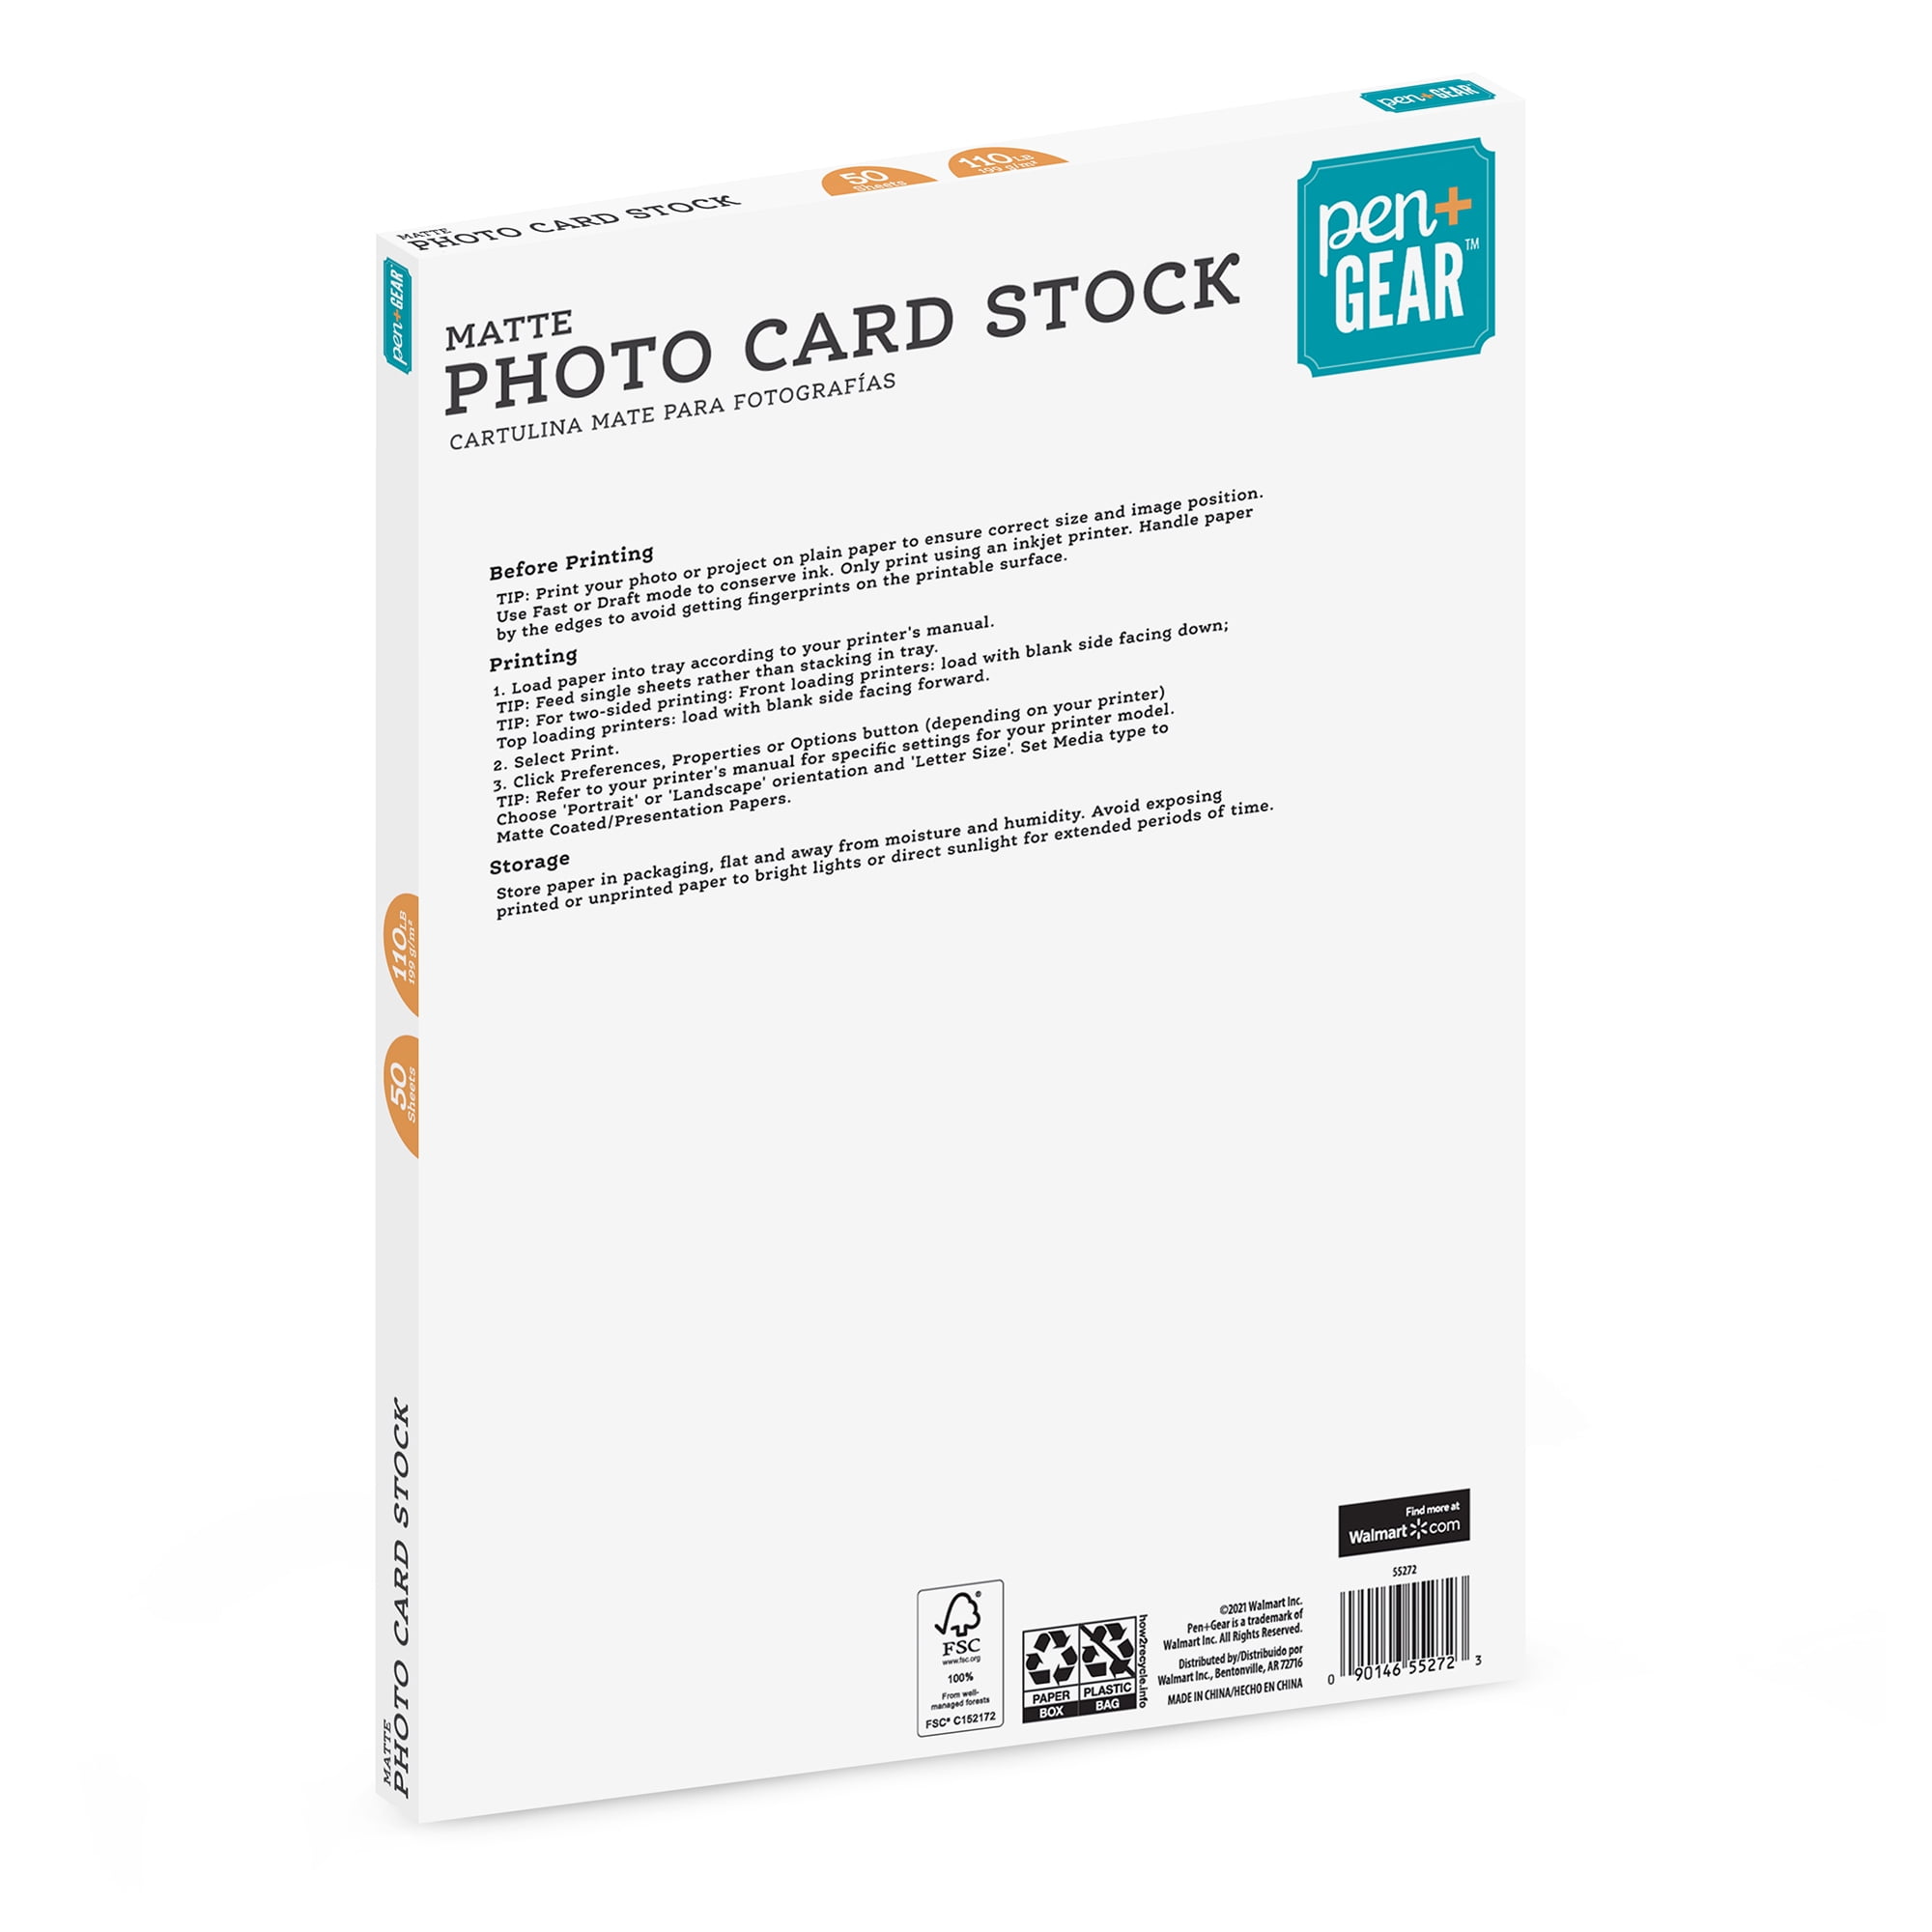 Pen + Gear Card Stock Paper, Assorted Bright, 8.5 x 11, 65 lb, 75 Sheets, 55306